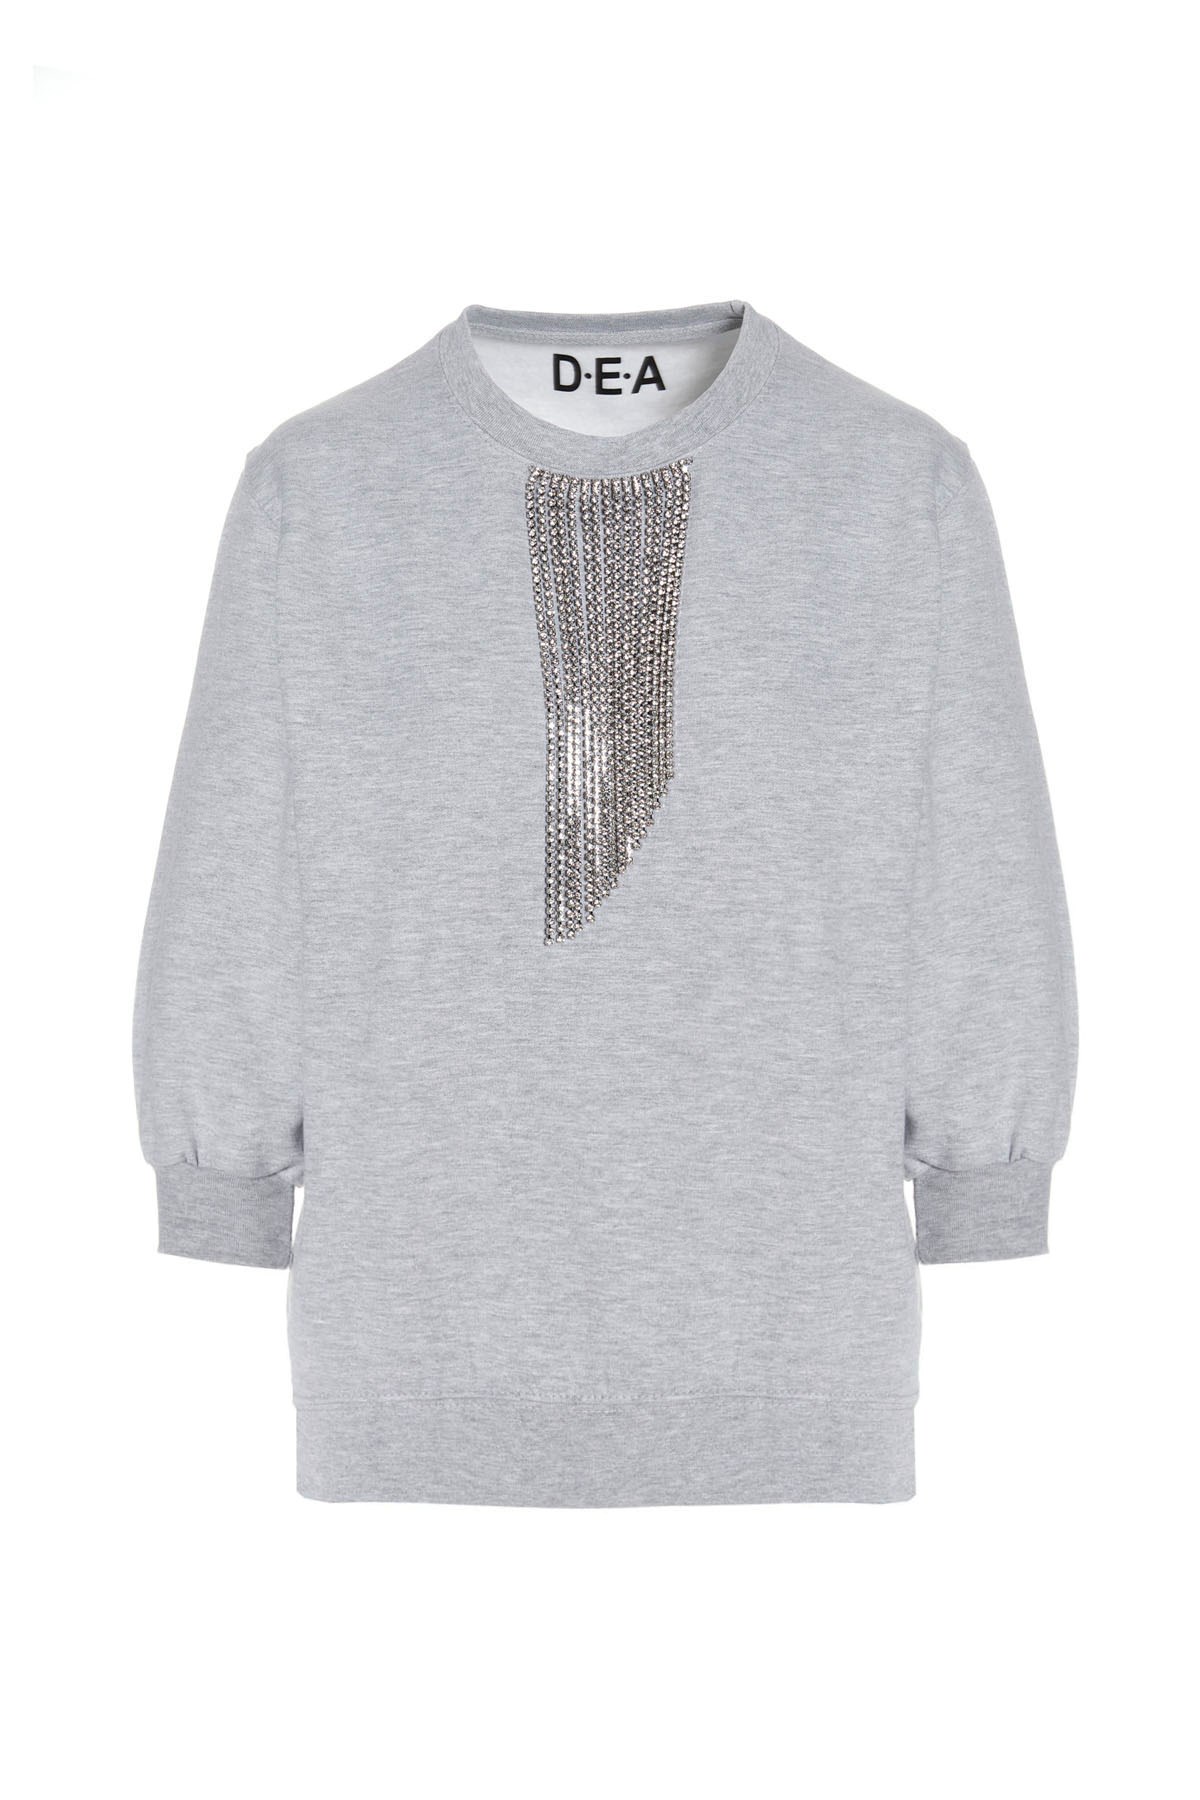 D•E•A 'Iride’ Sweatshirt